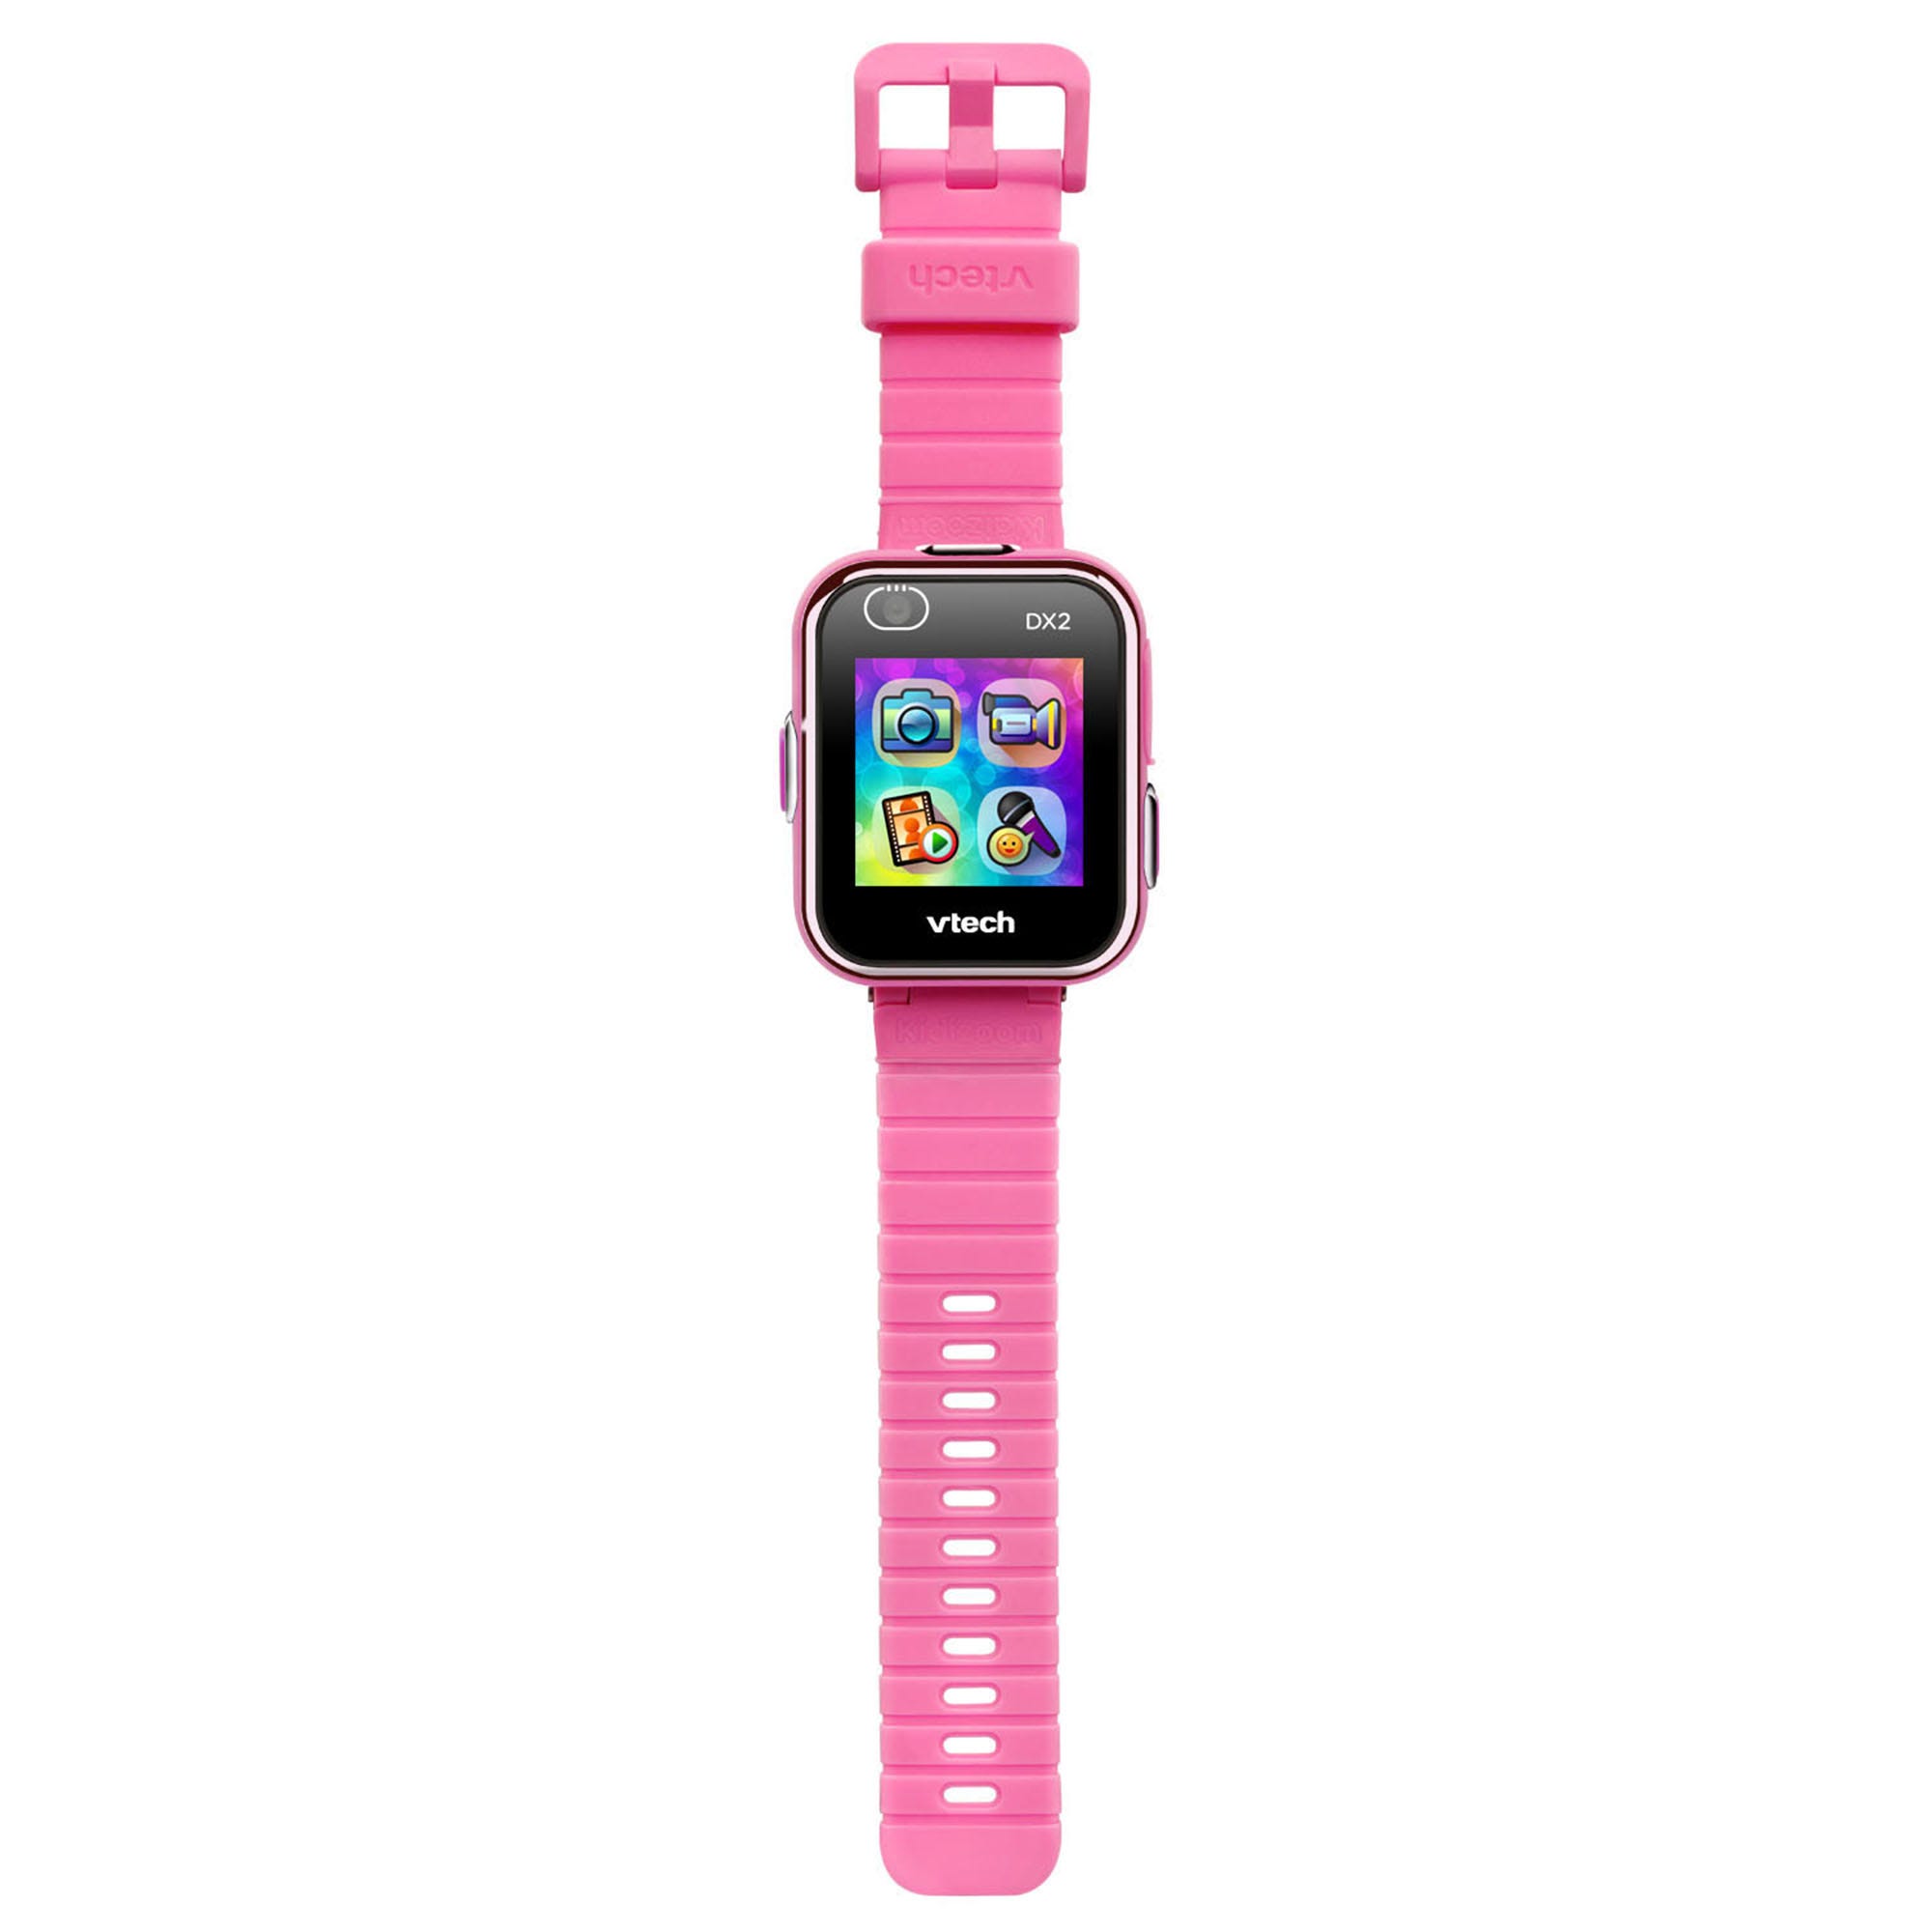 VTech Pink Kidizoom Smart Watch DX2